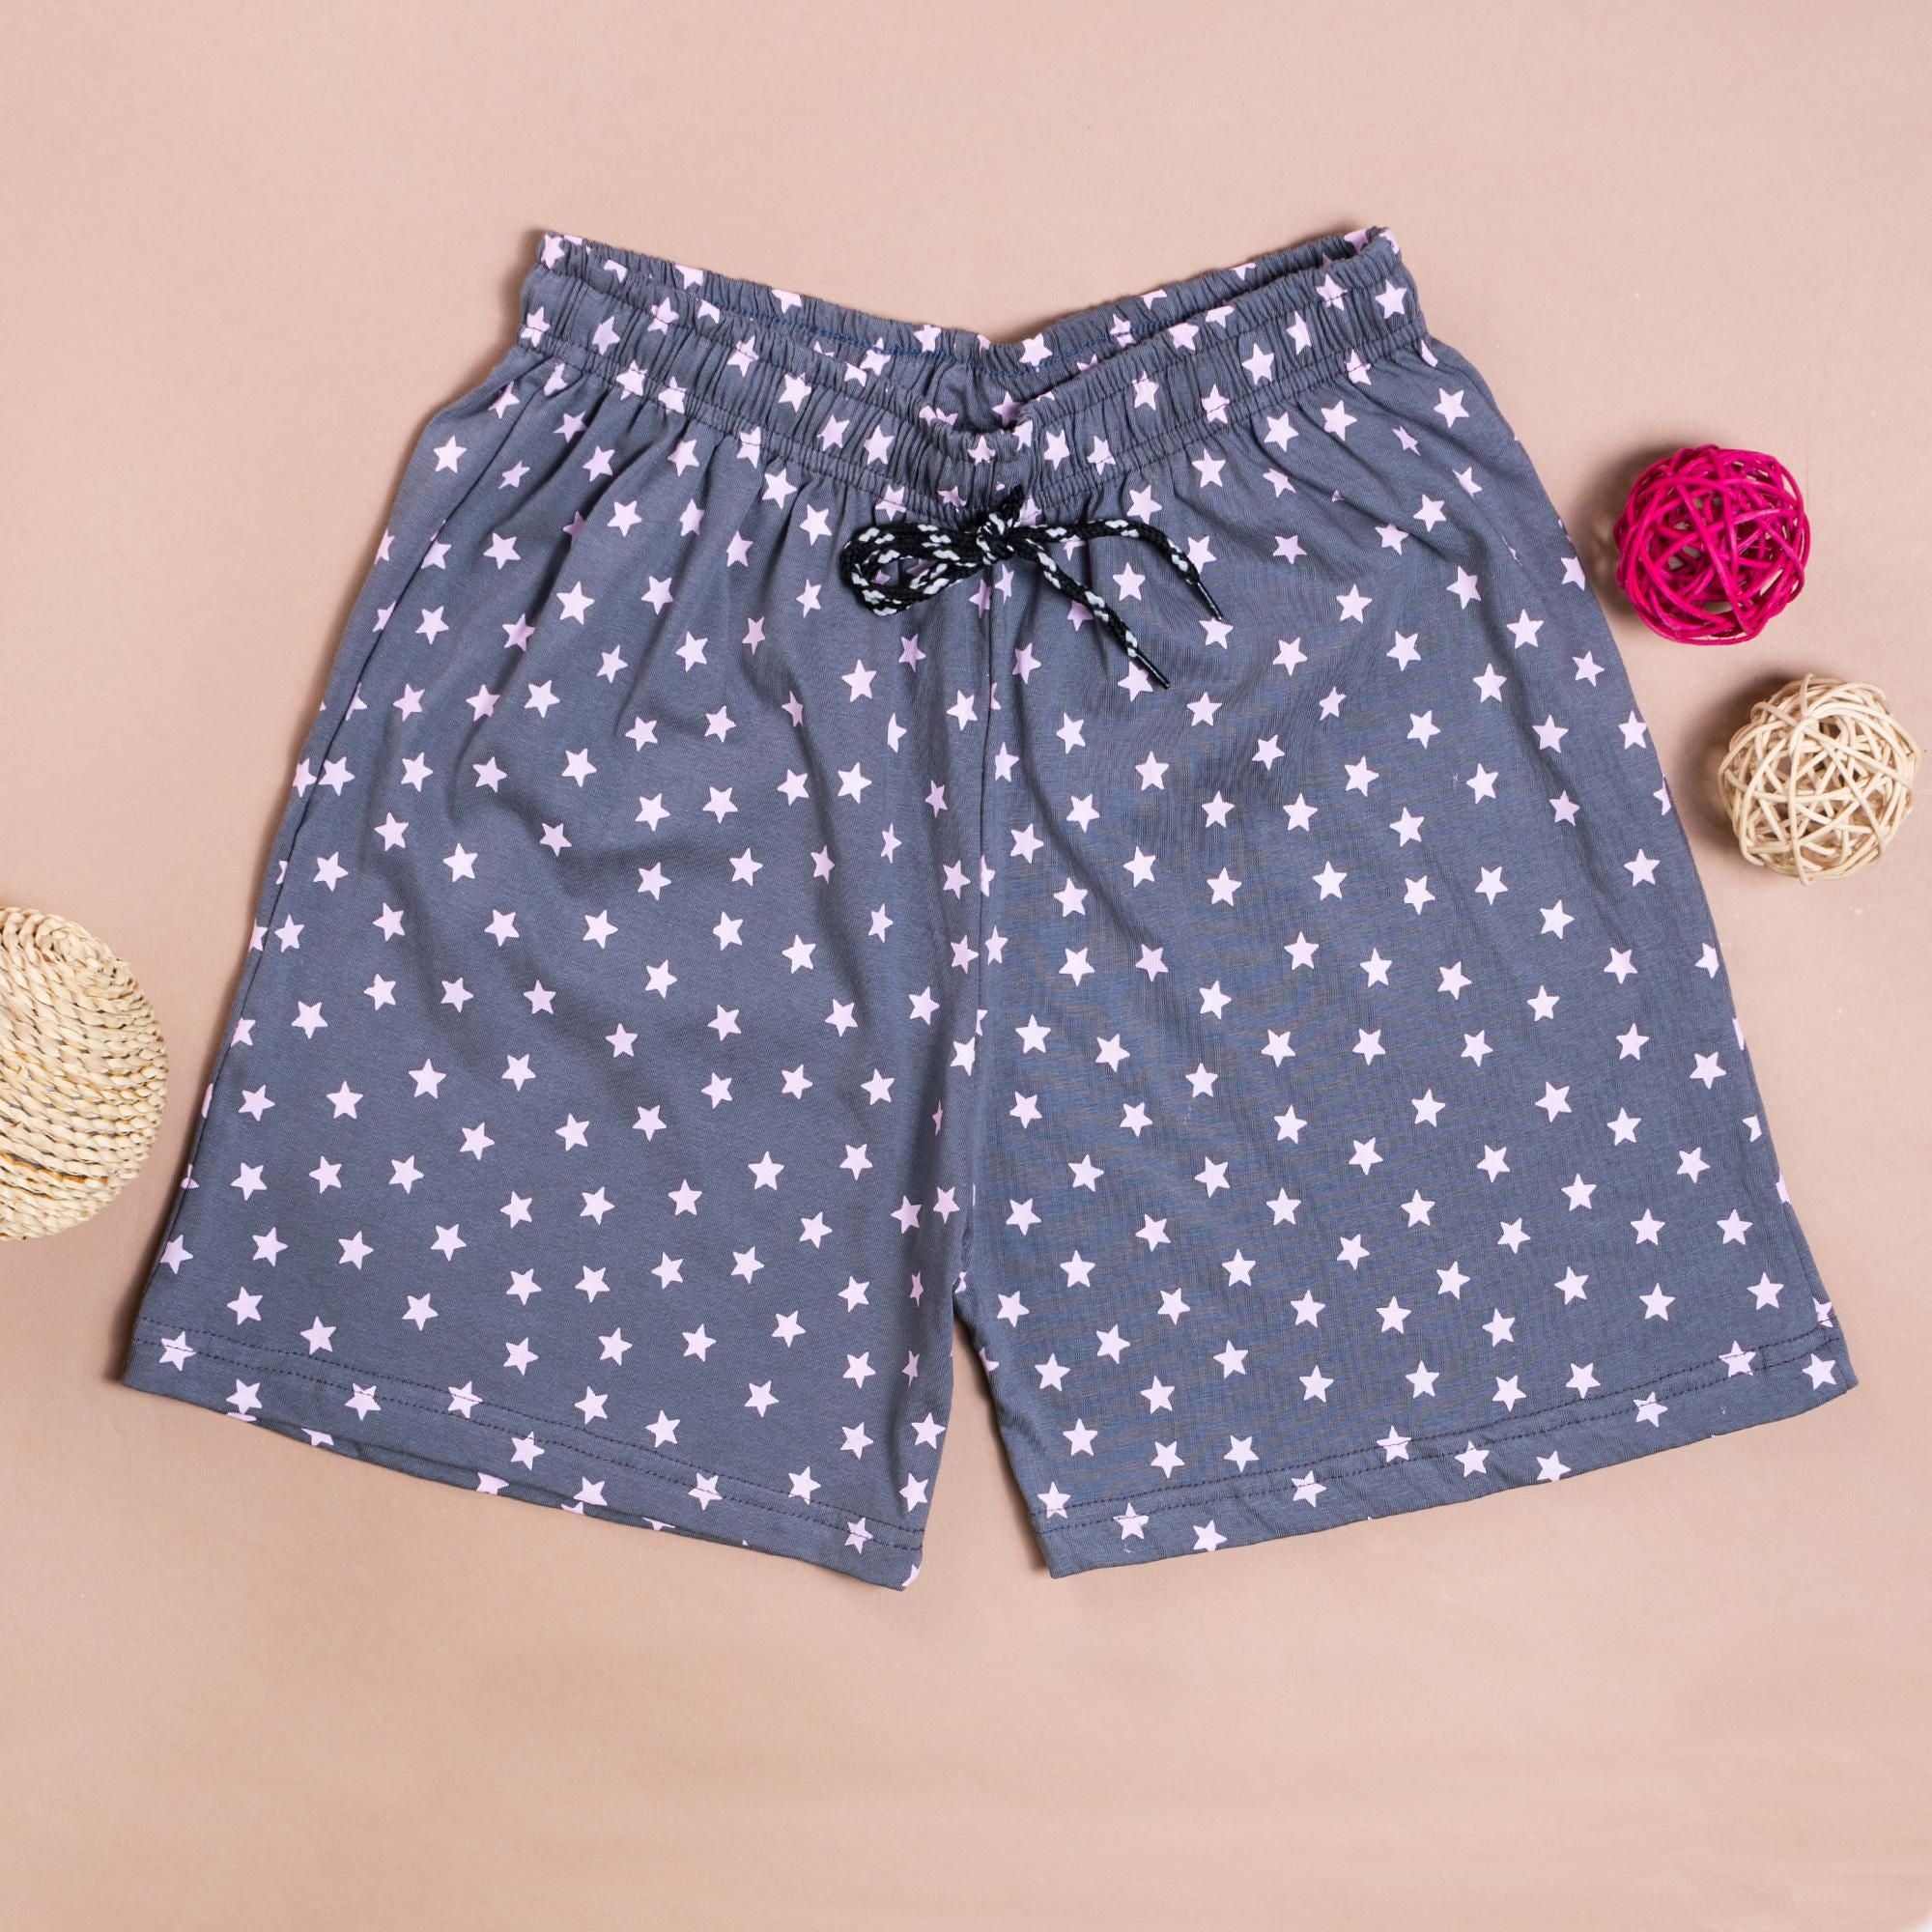 Women's Cotton Pinkstars Printed Shorts